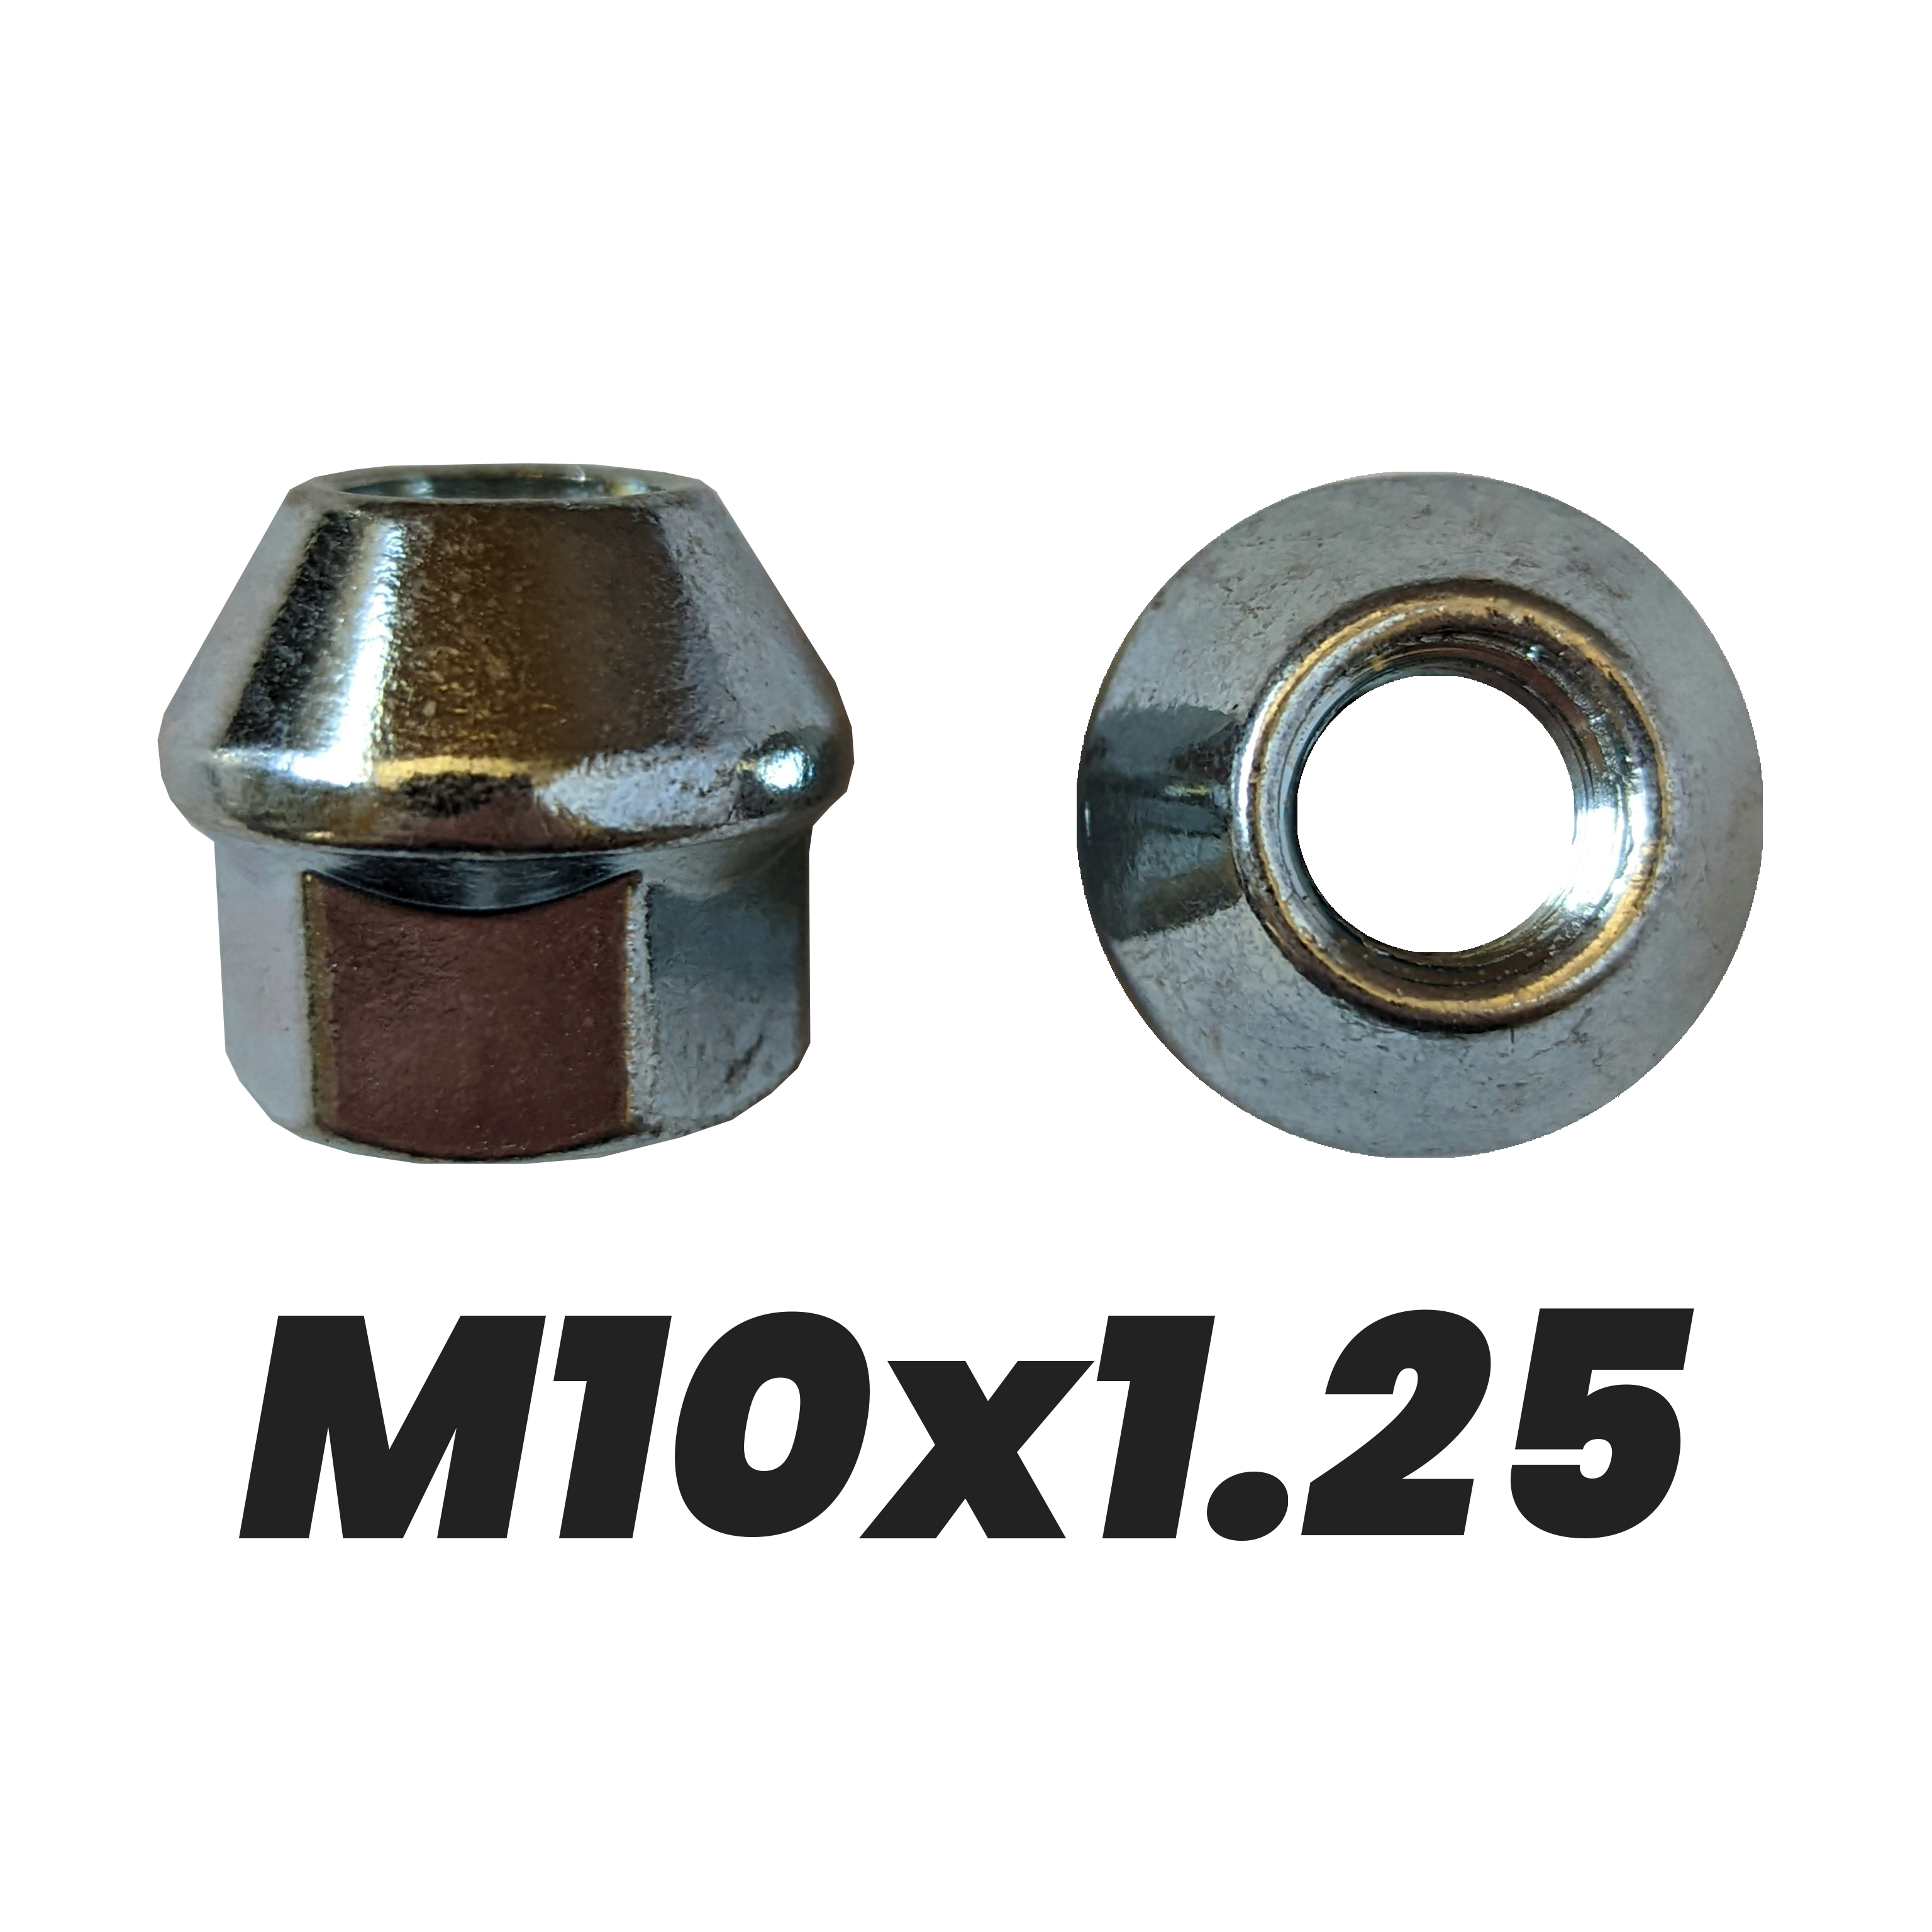 M10x1.25 Lug Nuts